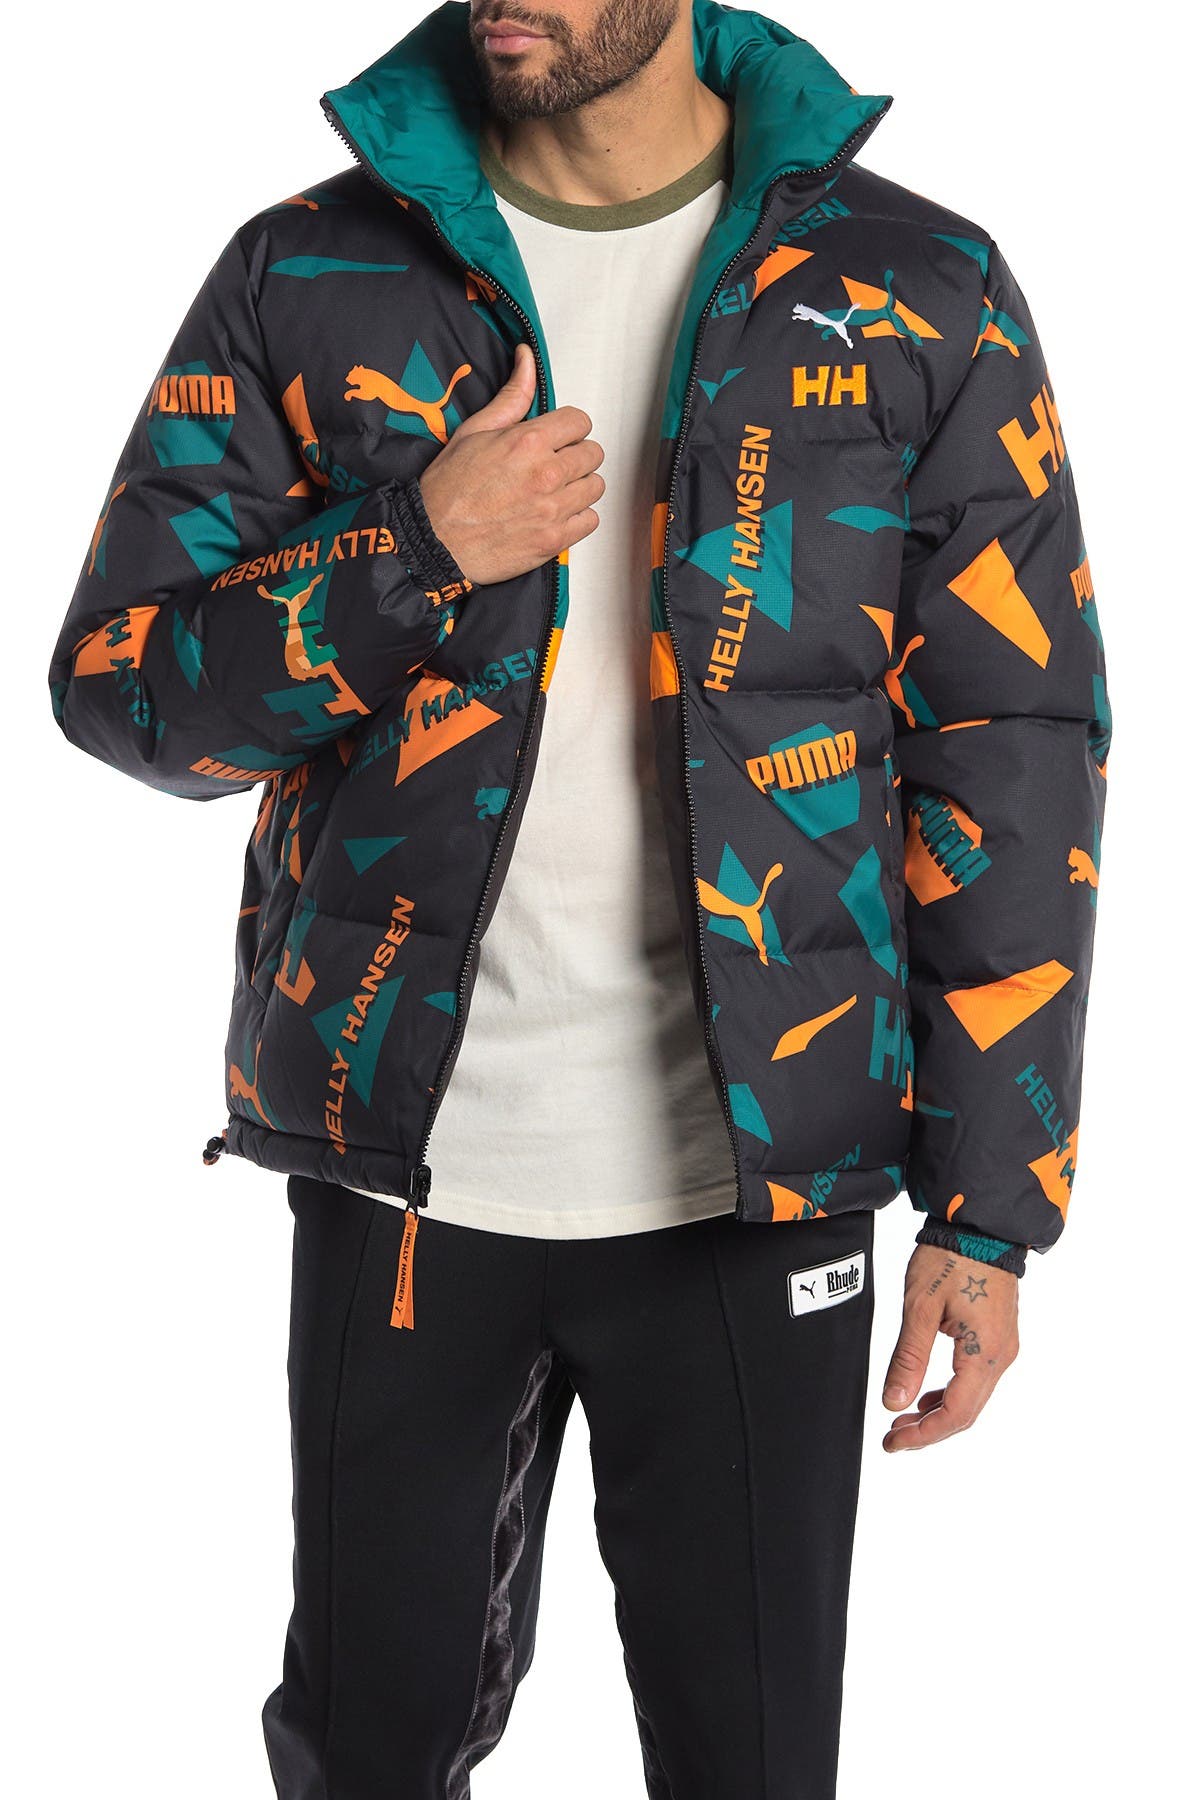 puma double sided jacket